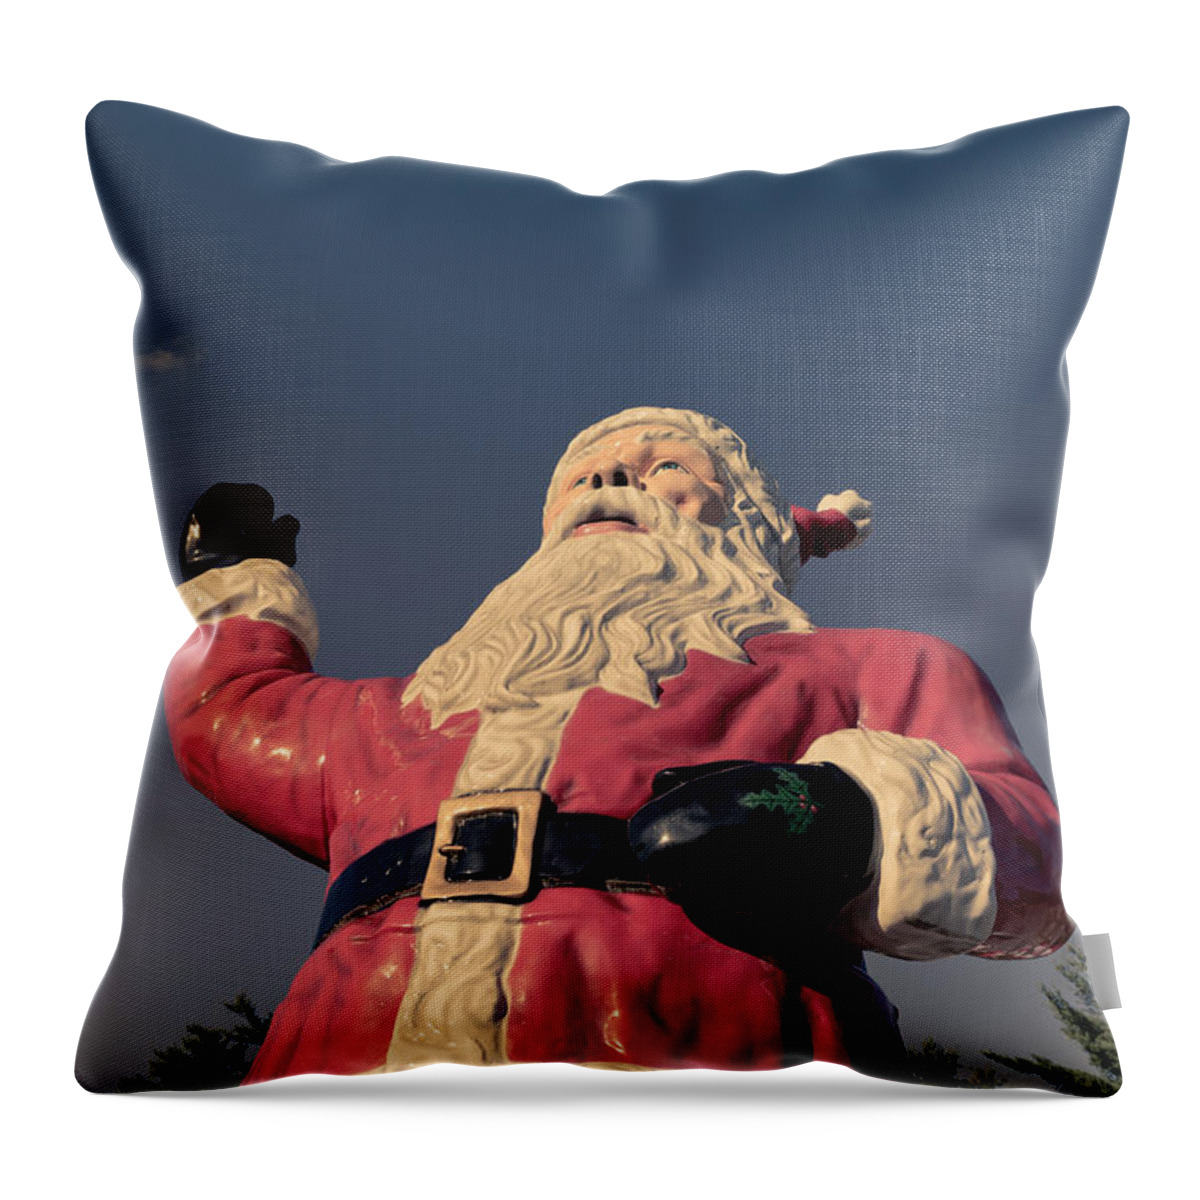 Lake George Throw Pillow featuring the photograph Fiberglass Santa Claus by Edward Fielding